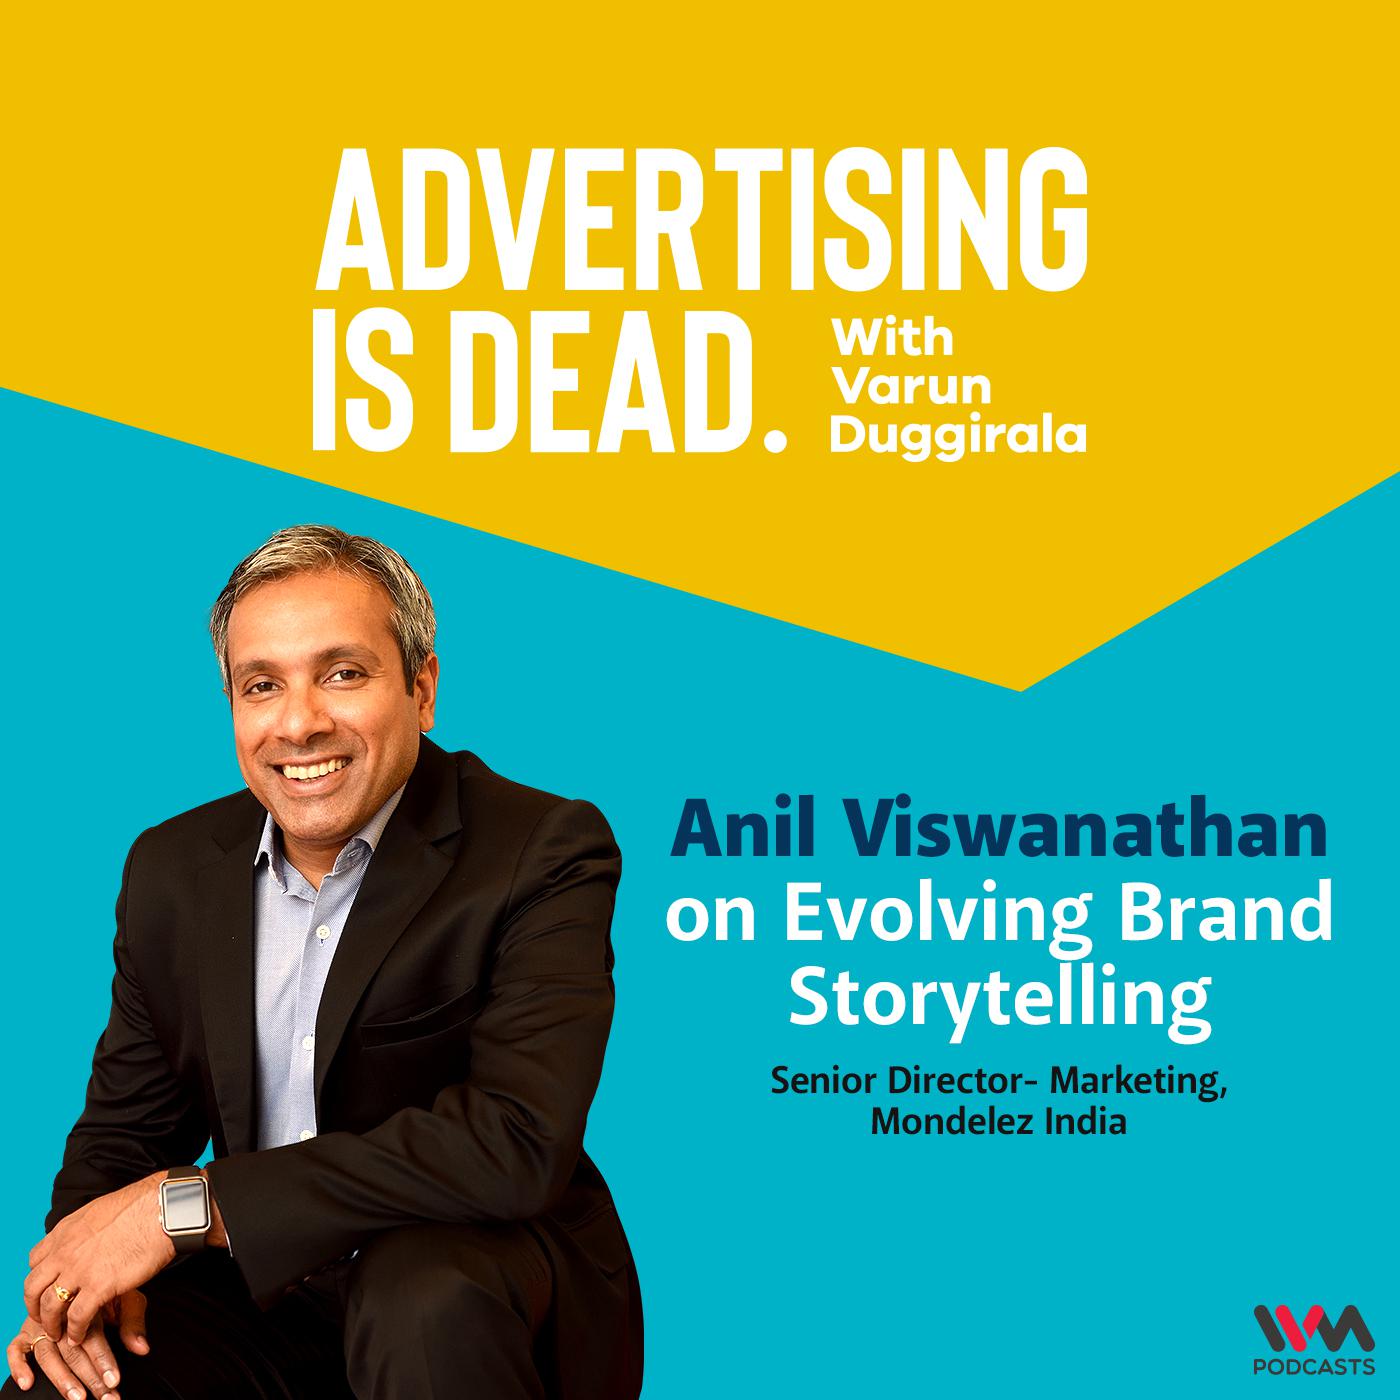 Anil Viswanathan on Evolving Brand Storytelling, Senior Director- Marketing, Mondelez India